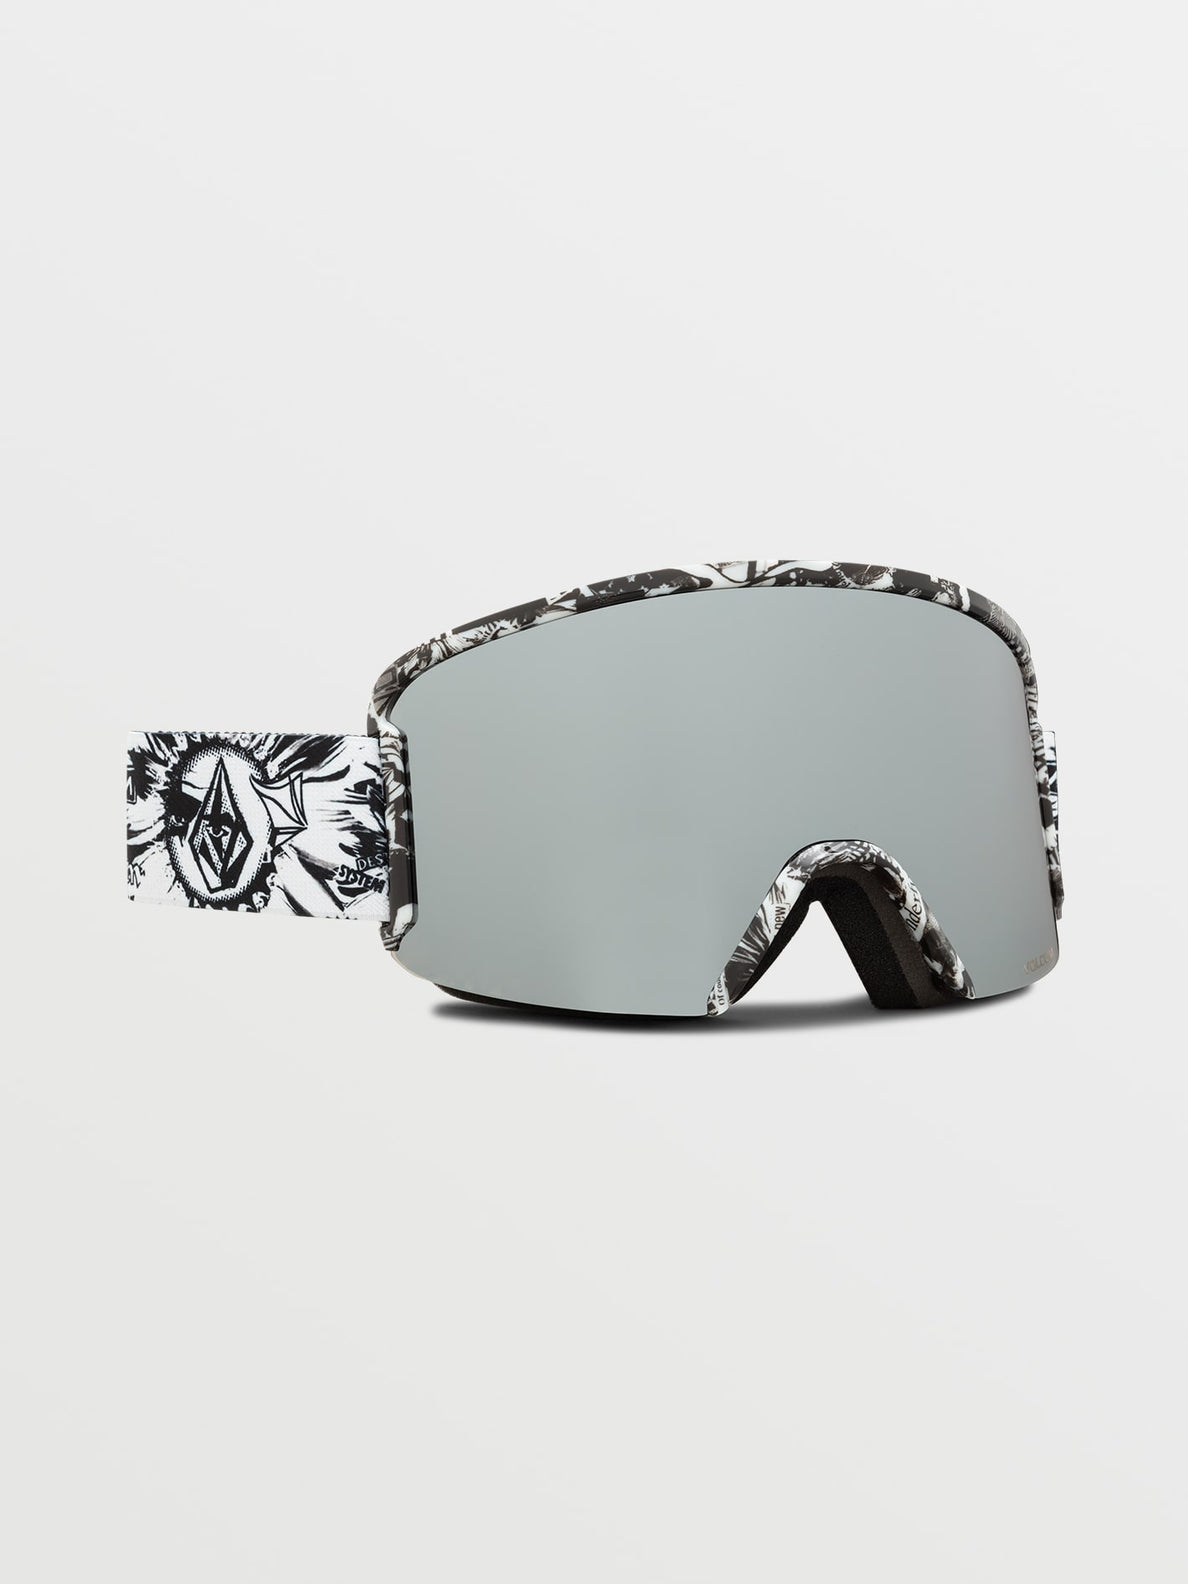 Garden Goggle with Bonus Lens - Op Art / Silver Chrome